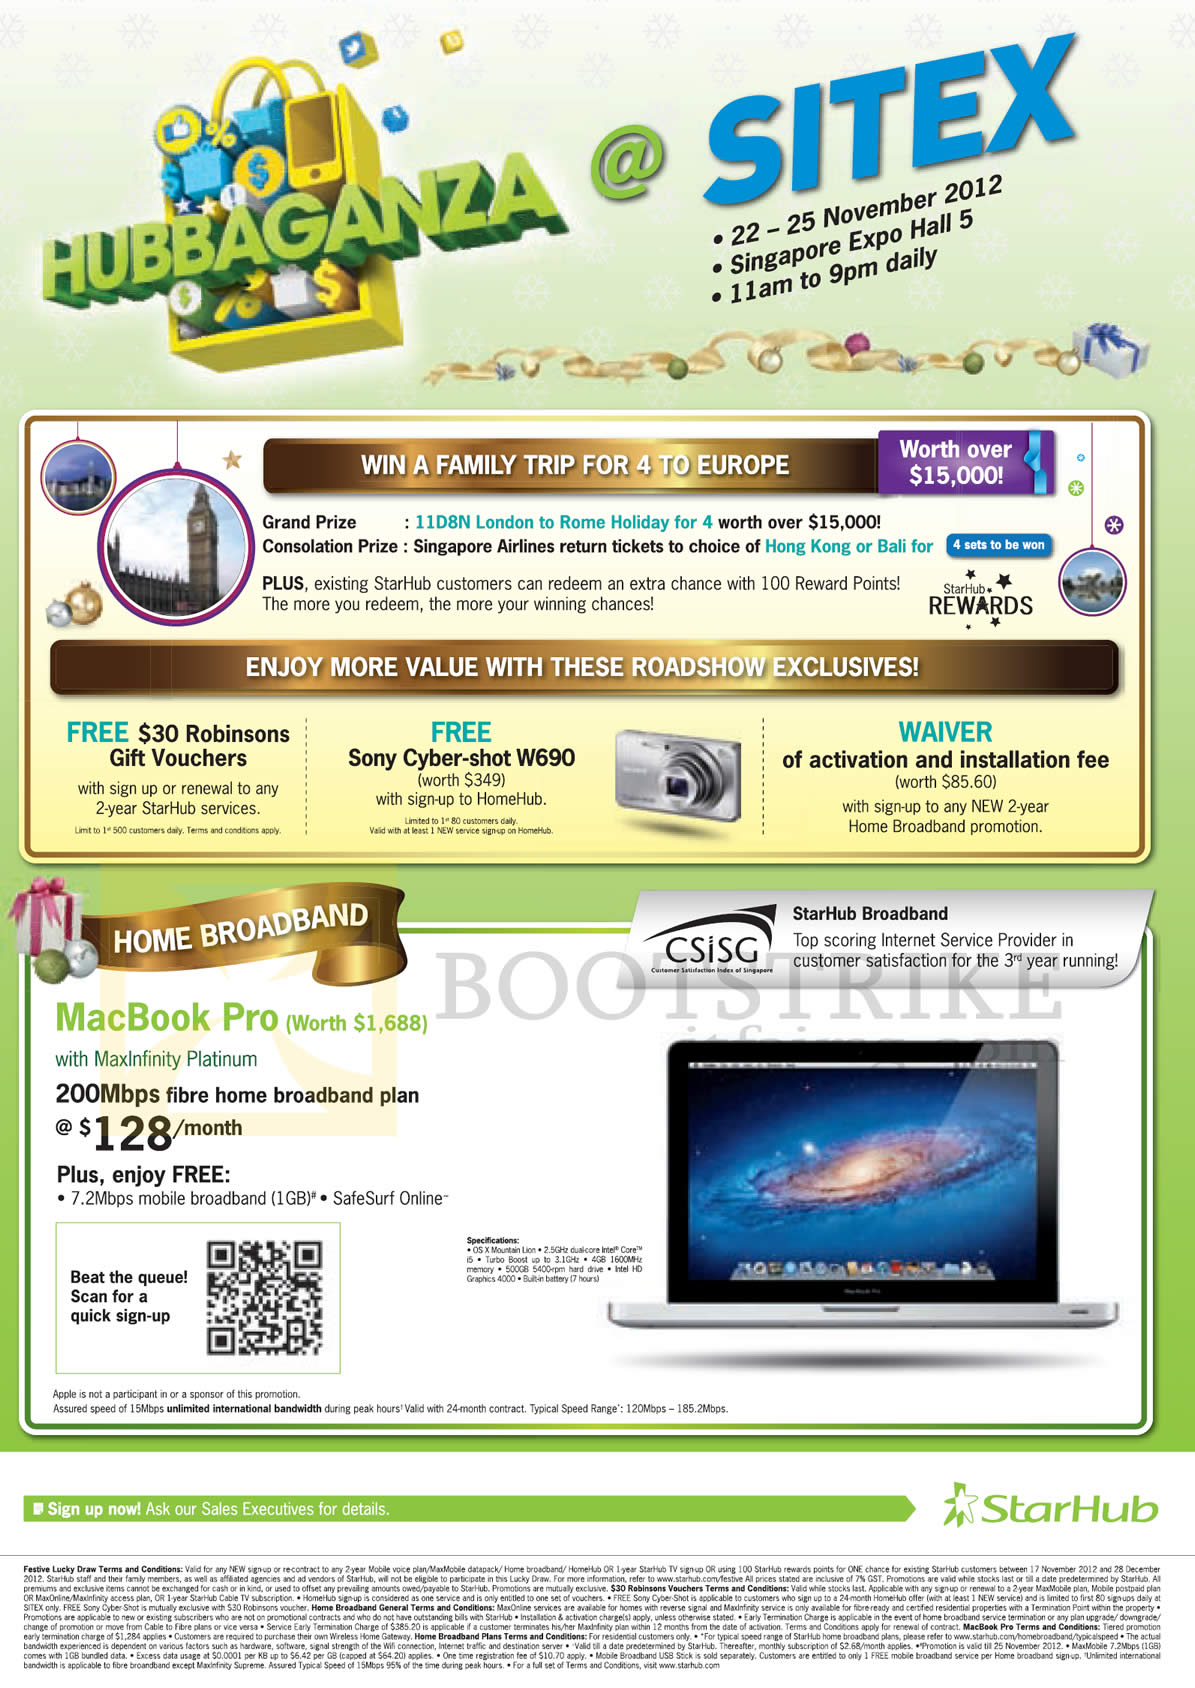 SITEX 2012 price list image brochure of Starhub Roadshow Specials Broadband Free Apple Macbook Pro MaxInfinity Platinum Fibre Broadband, Free Robinsons Vouchers, Sony Cybershot W690, Waiver